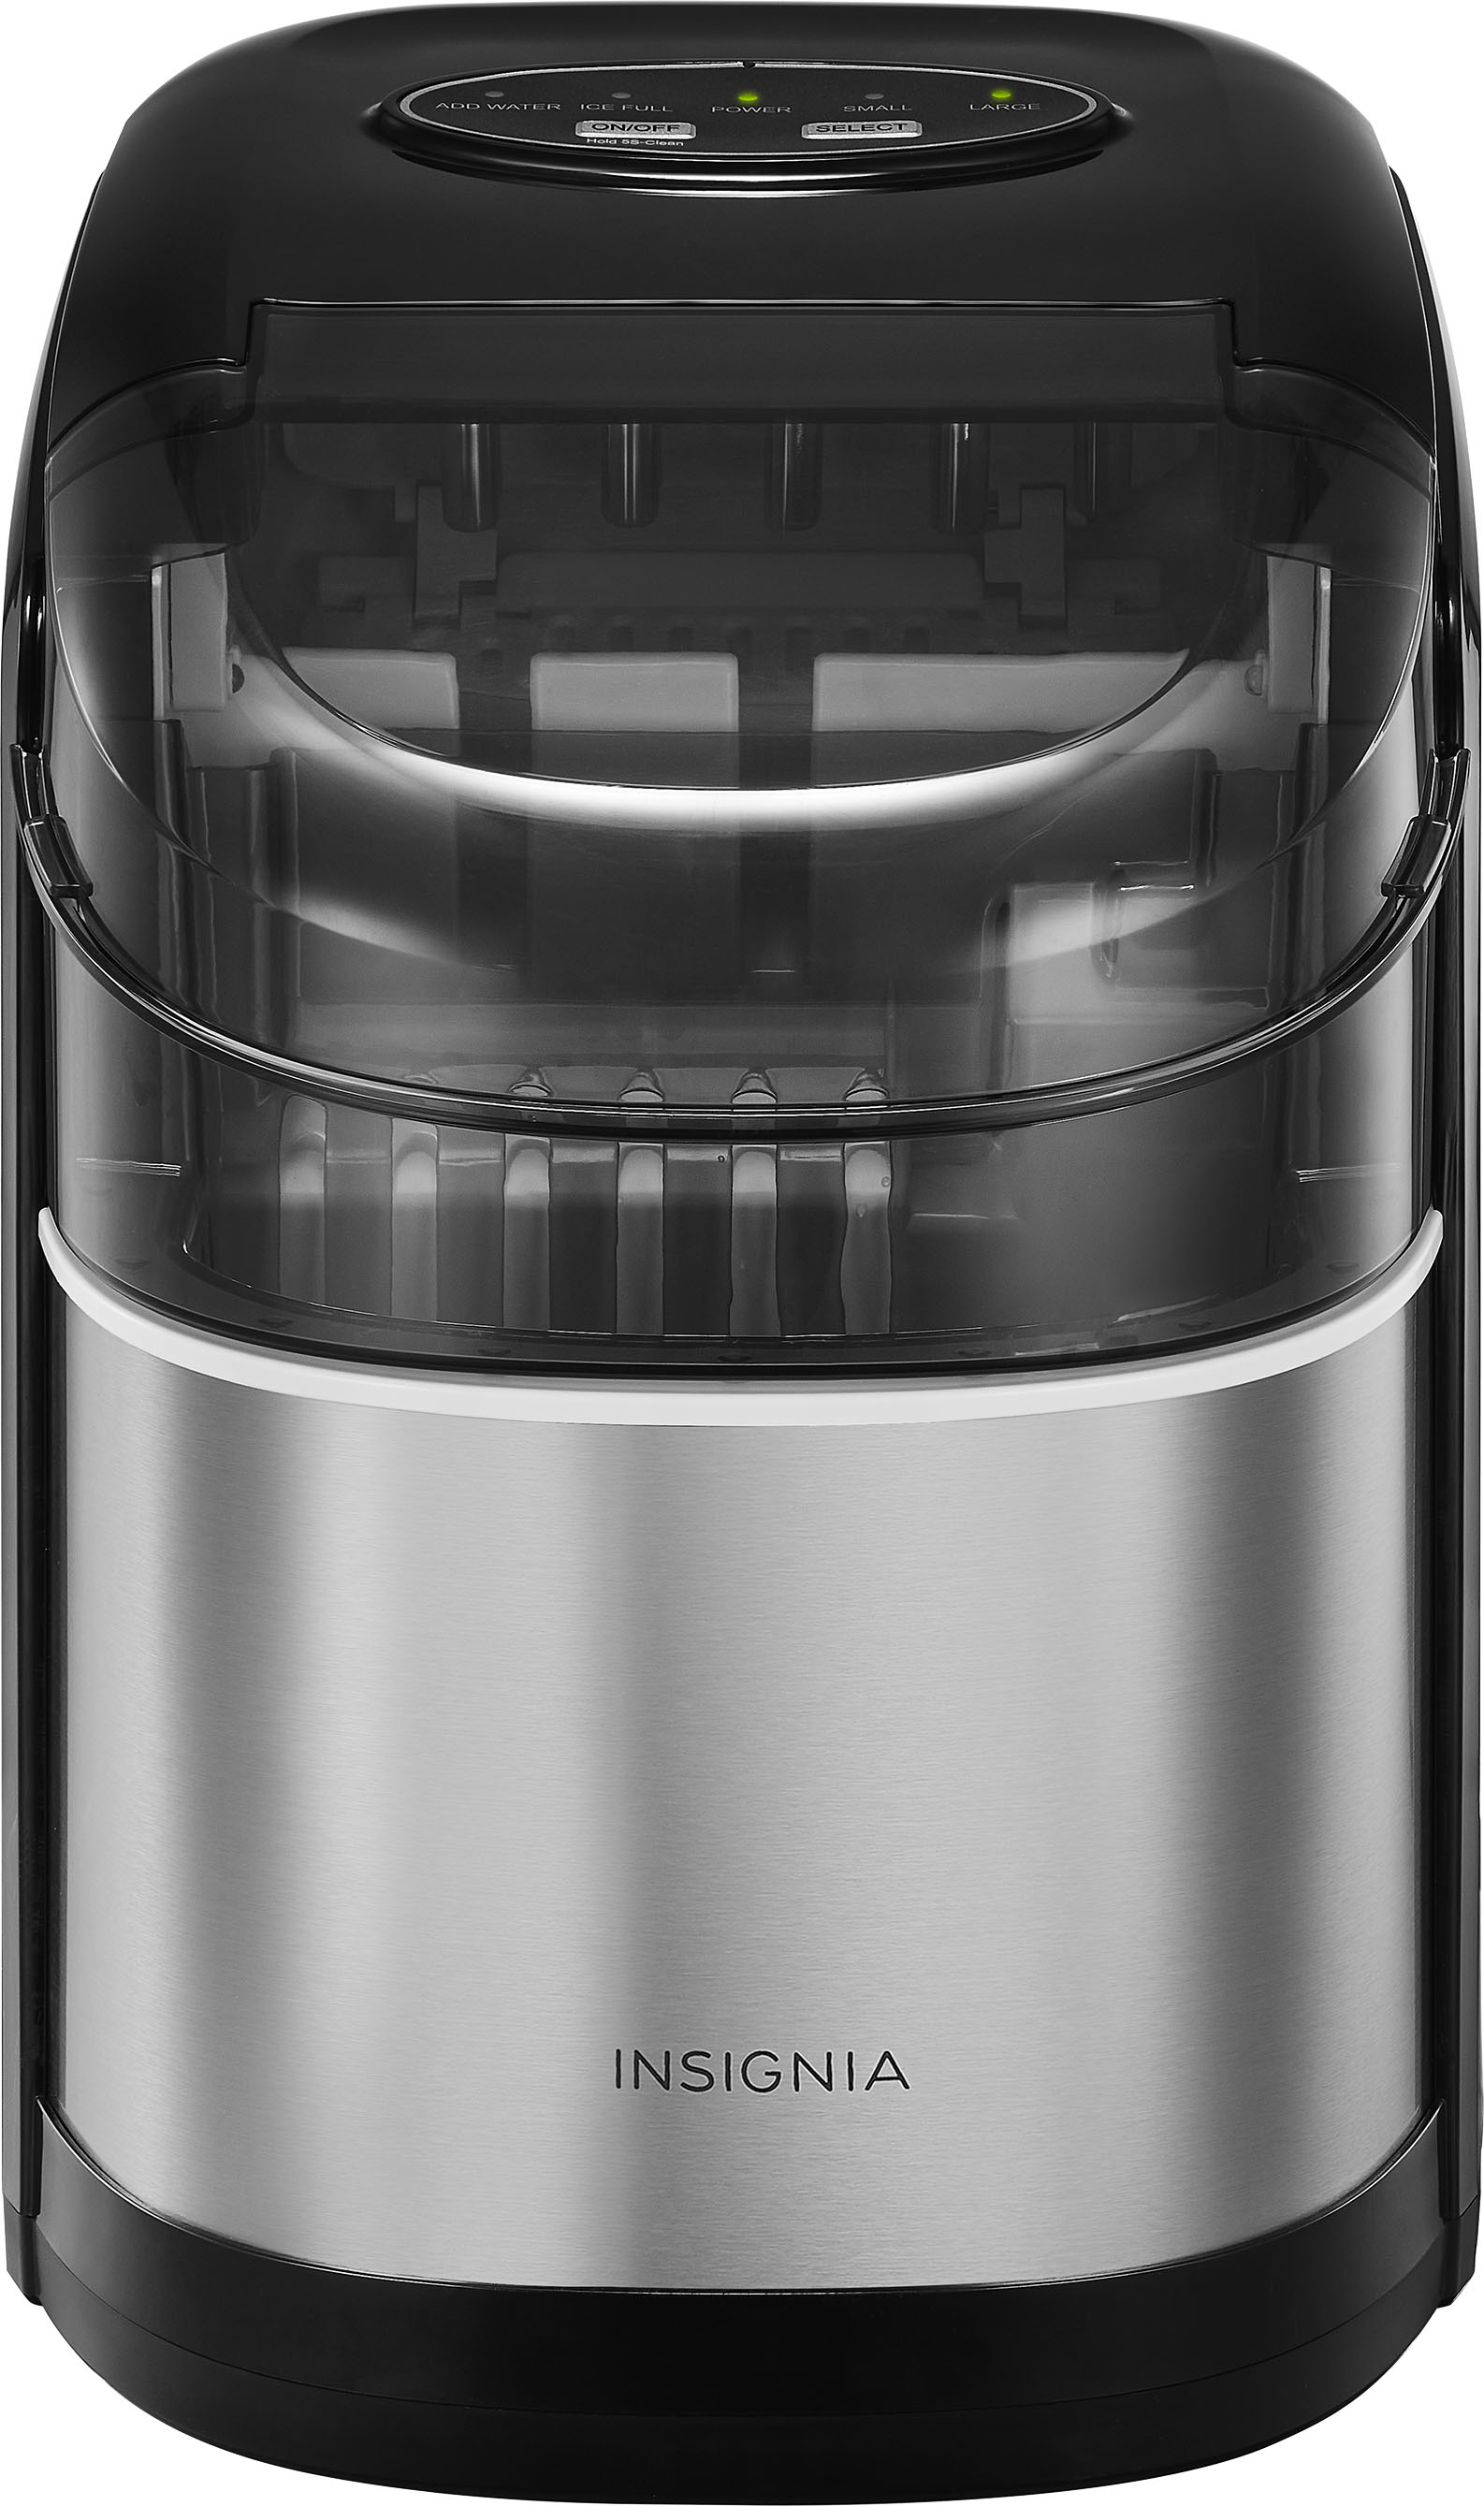 Insignia Portable Icemaker 33 lb. With Auto Shut-Off $99.99 (Reg